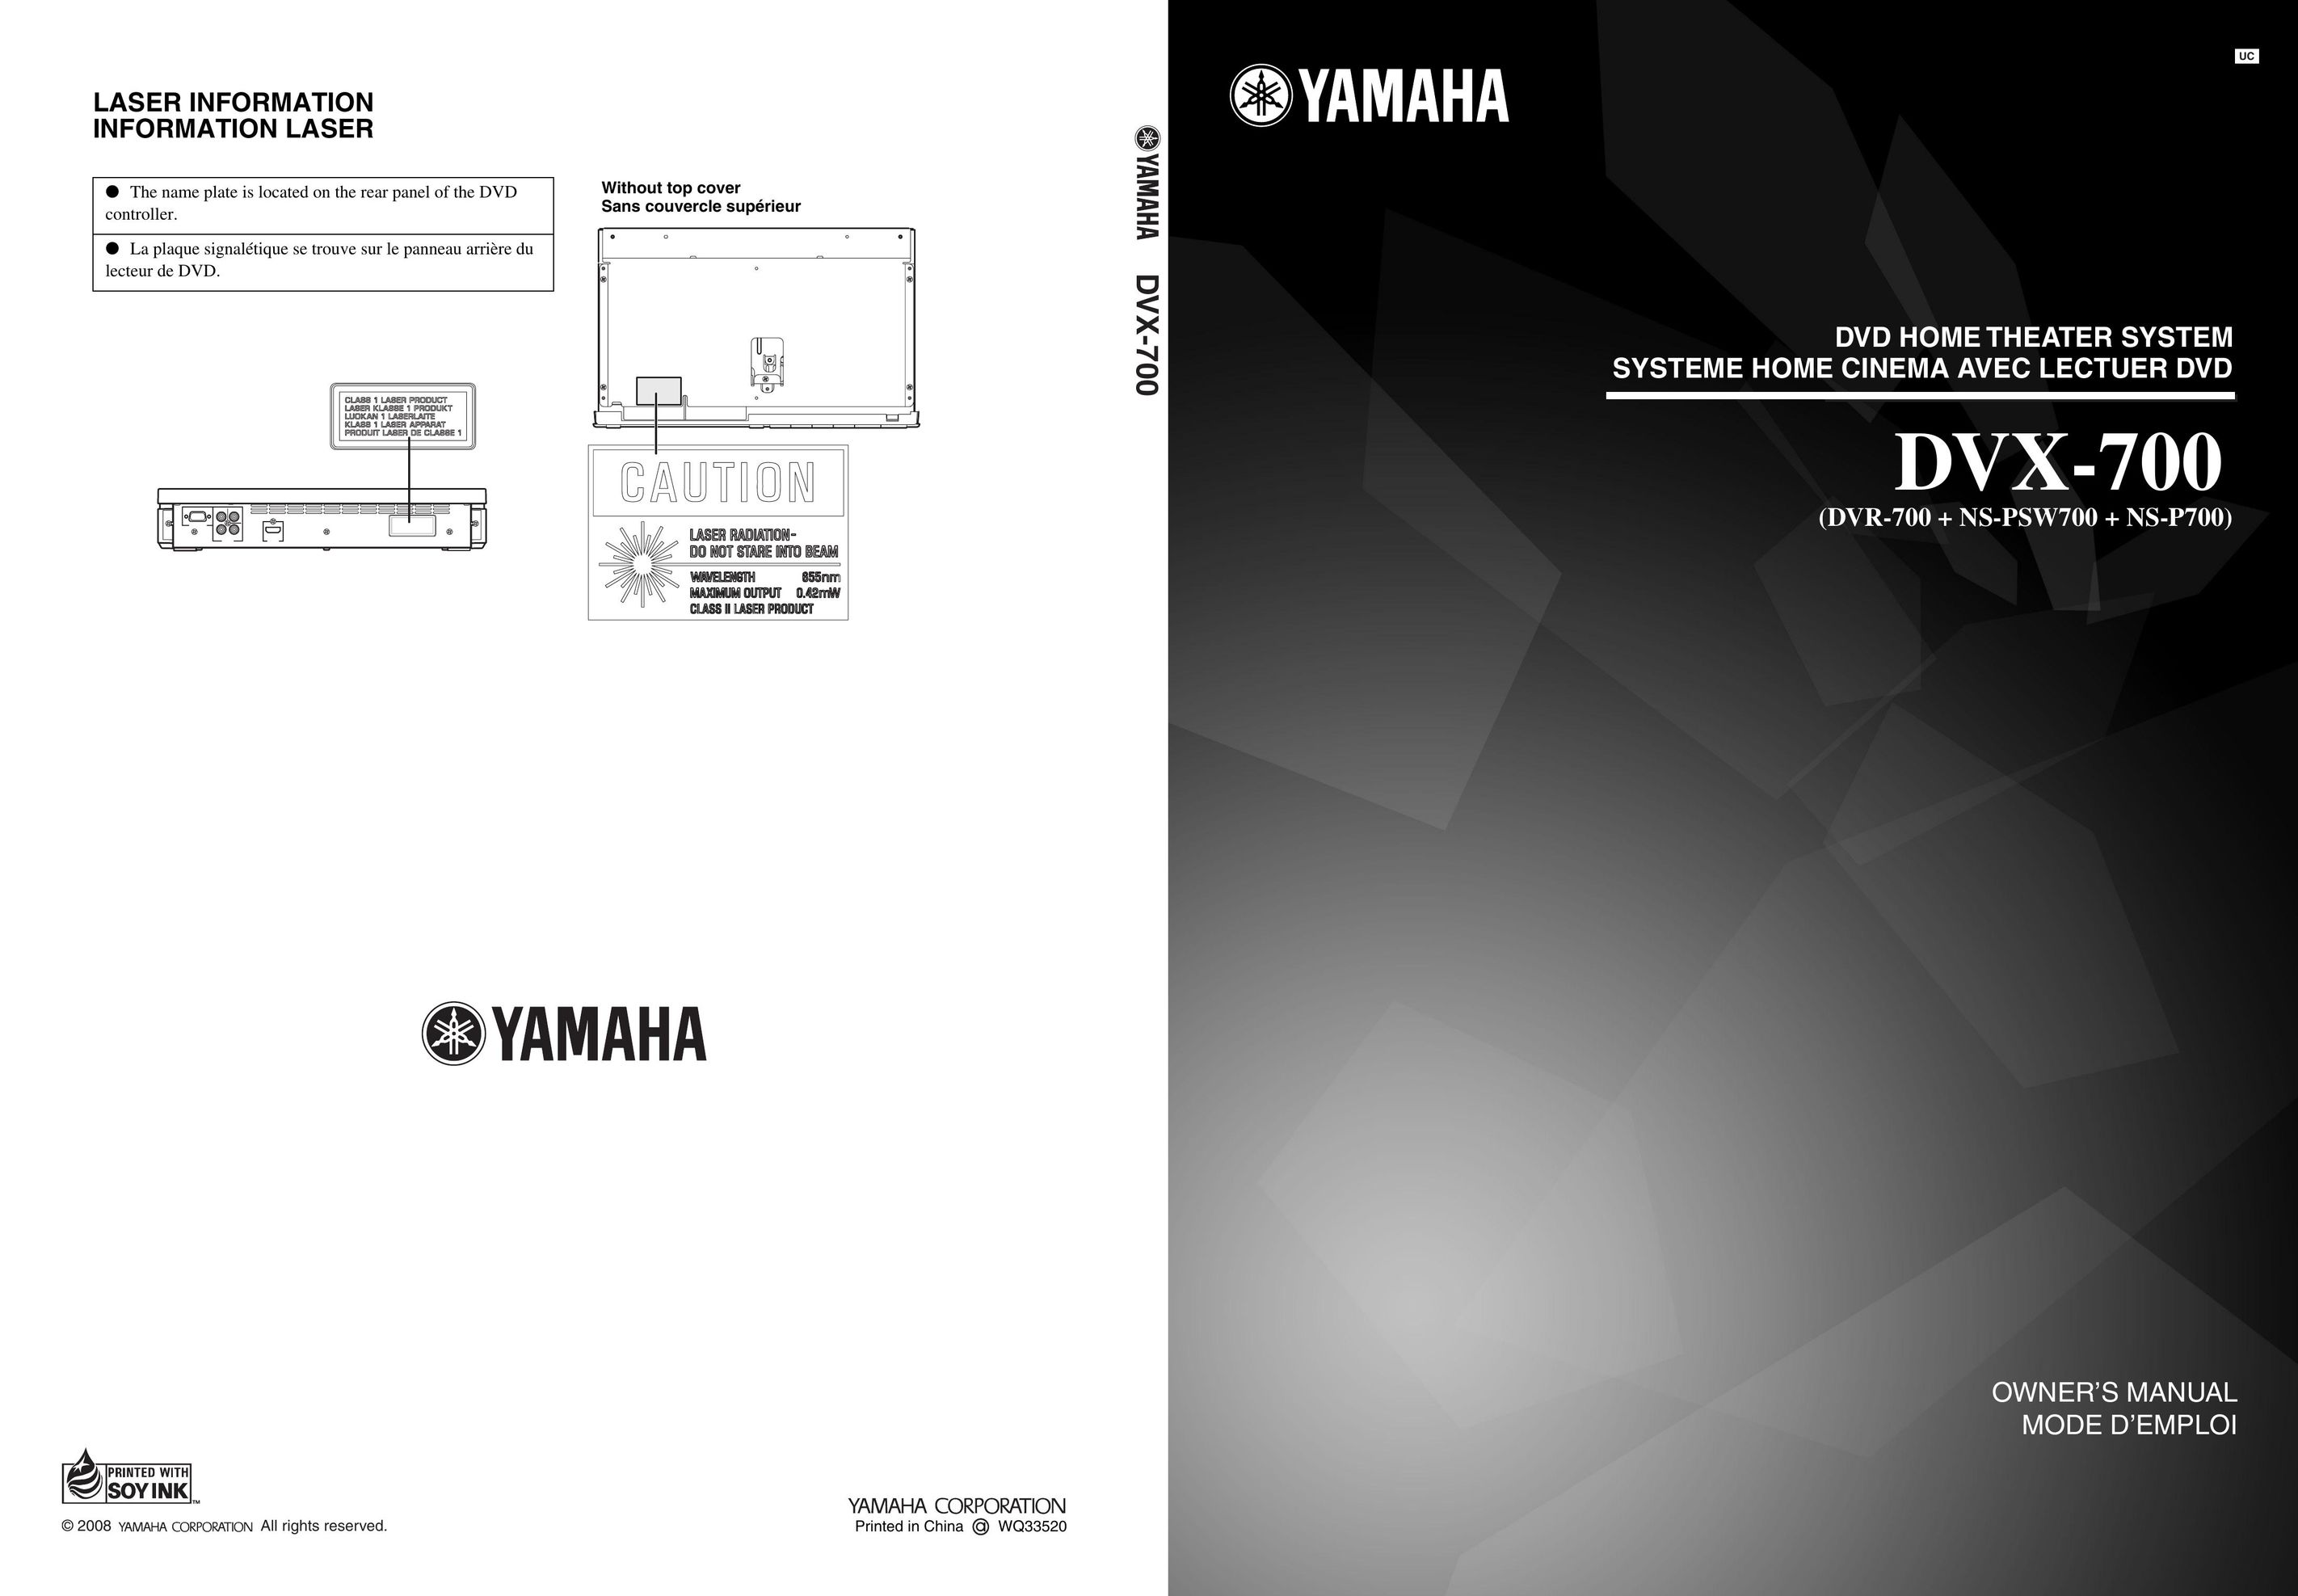 Yamaha DVX-700 Home Theater System User Manual